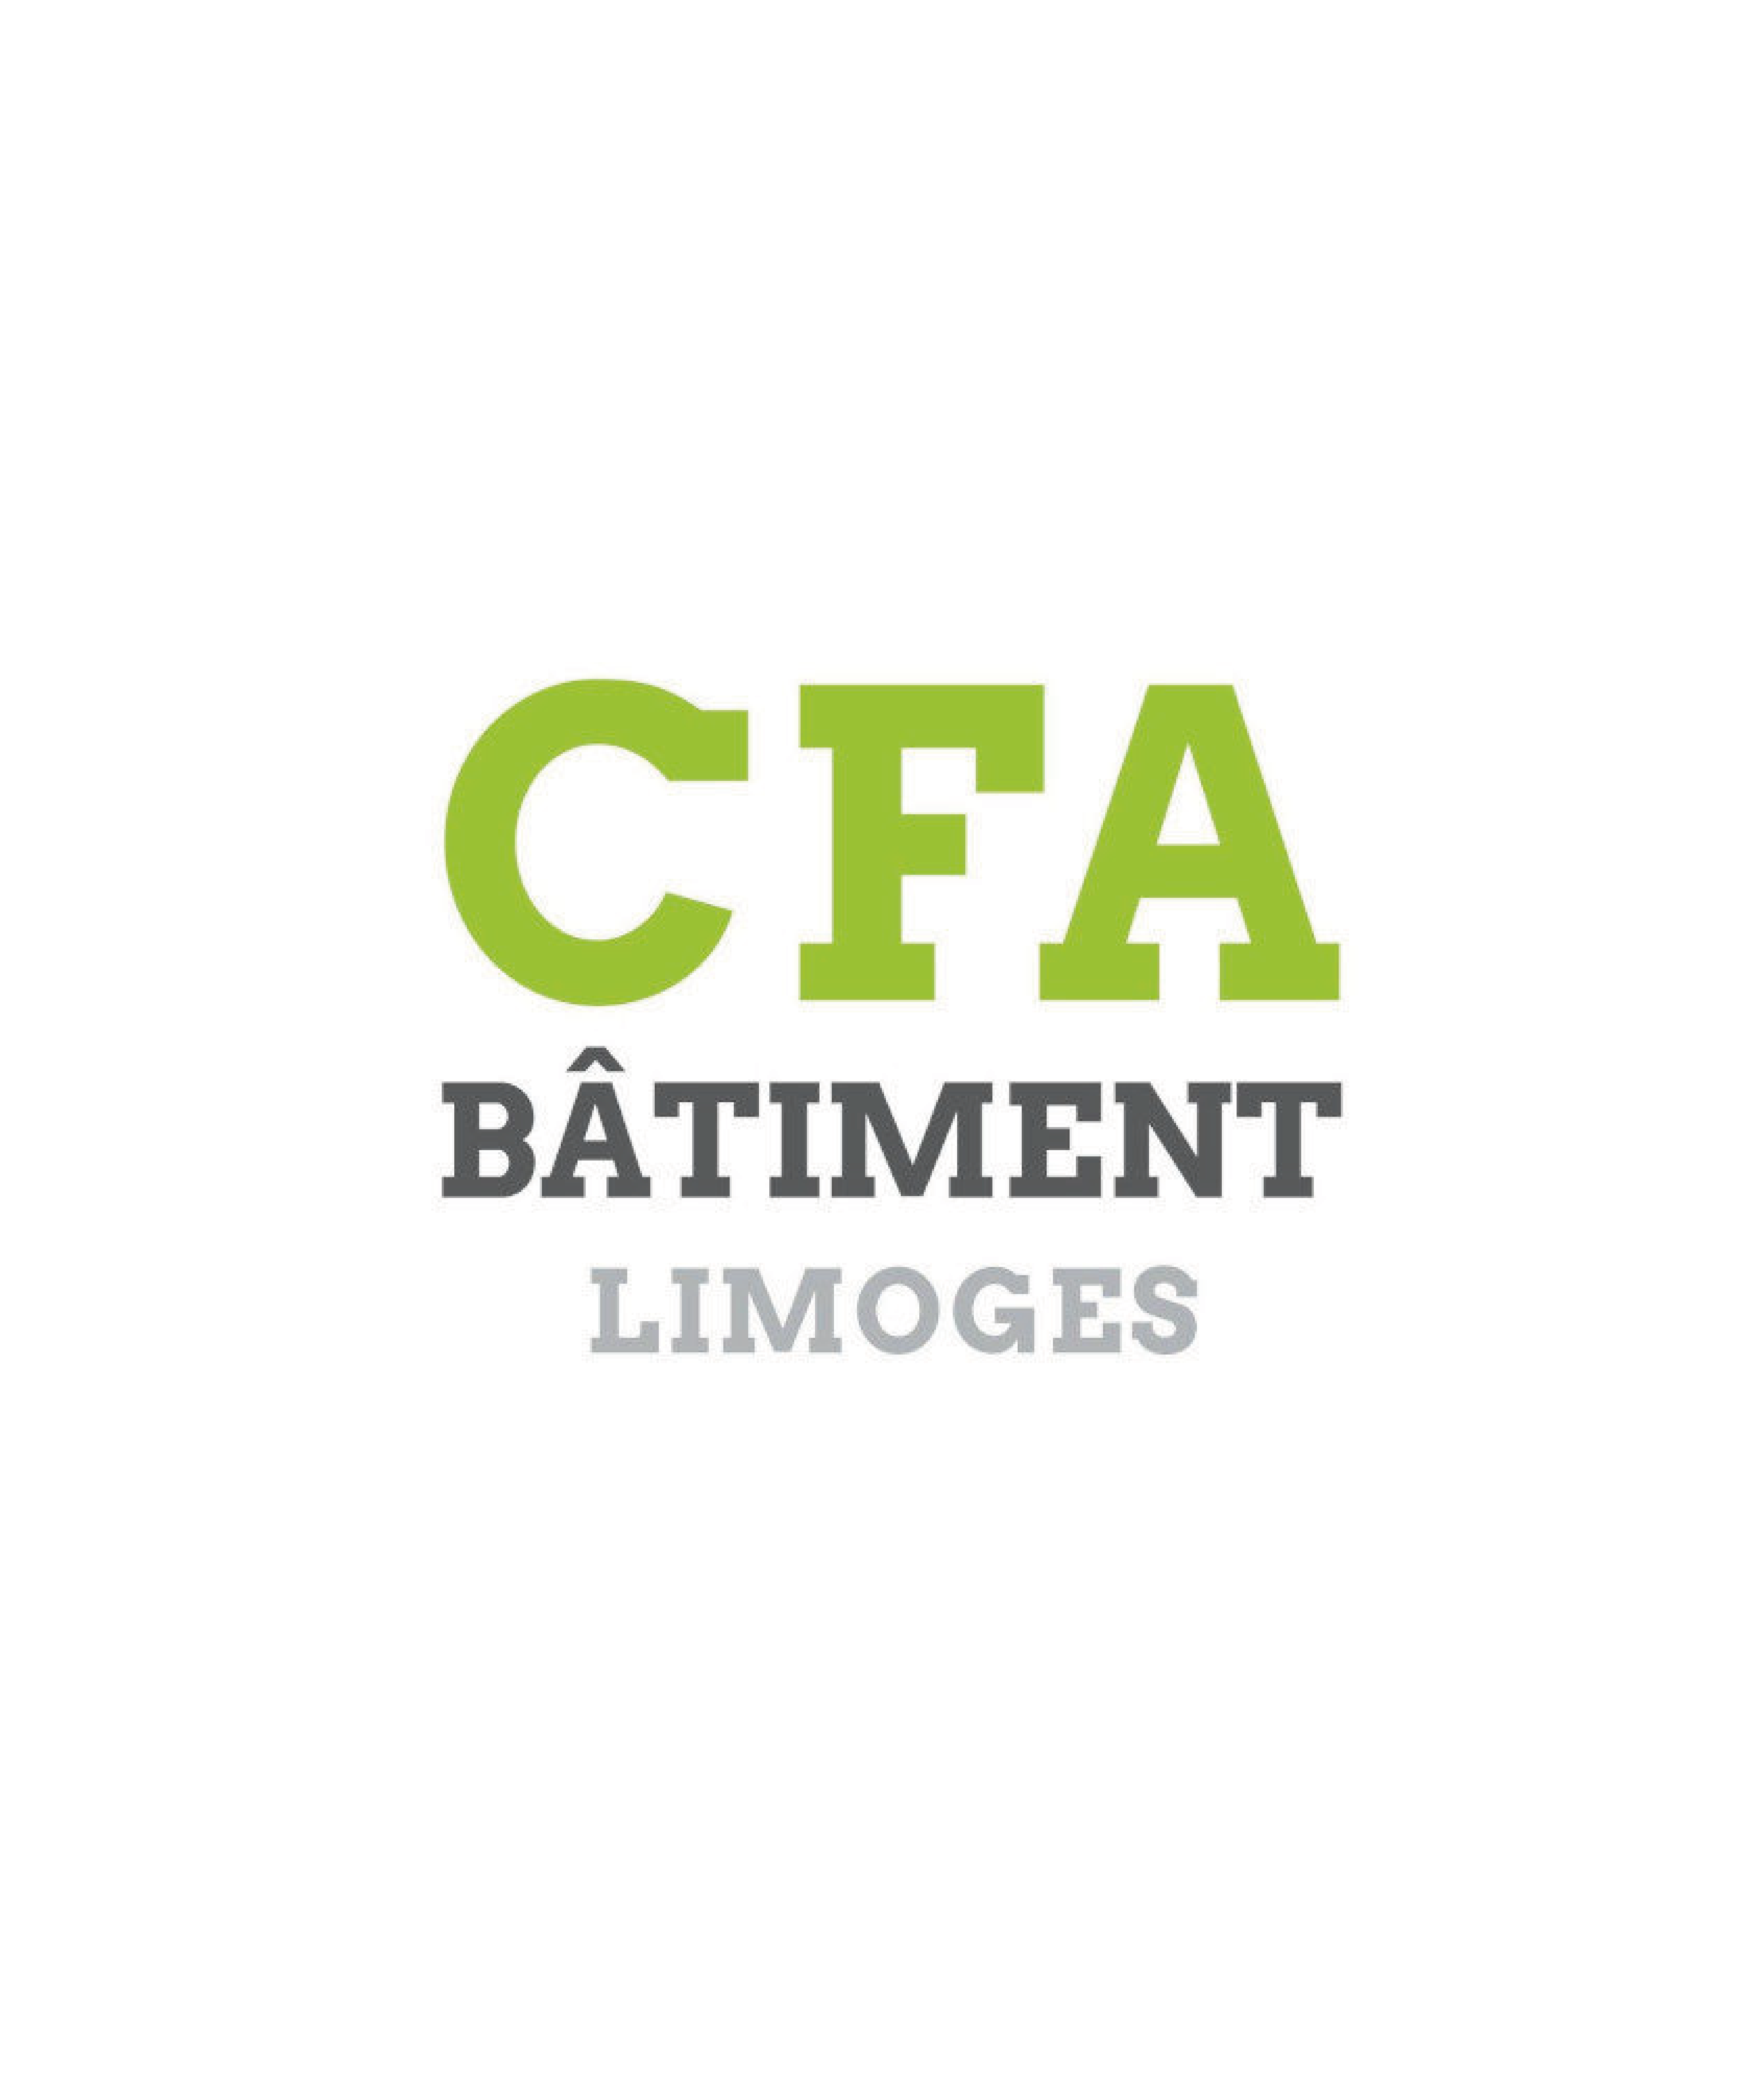 CFA Limoges